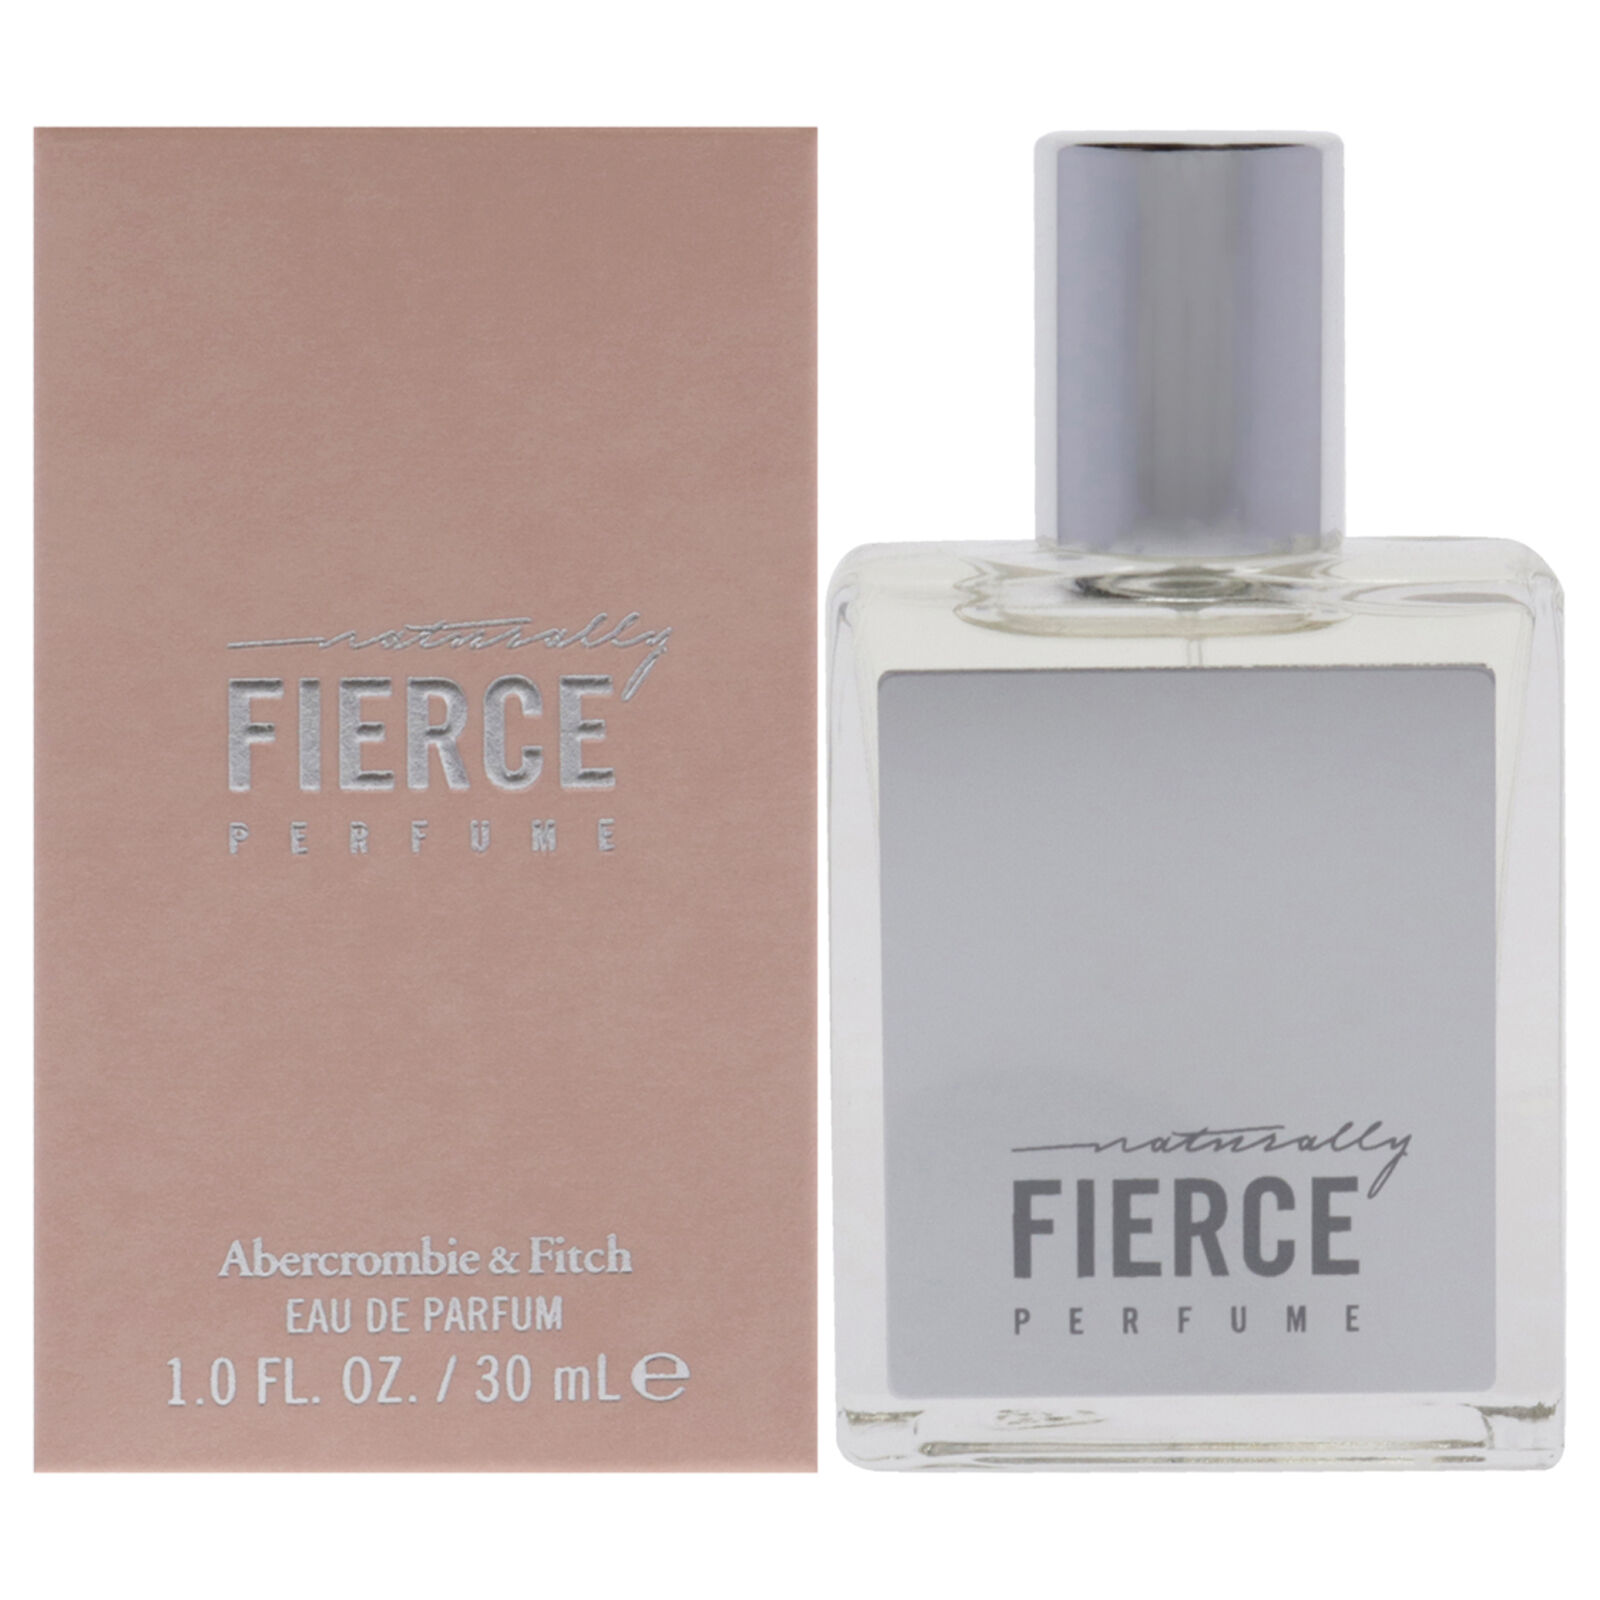 Вода парфюмерная Abercrombie & Fitch Naturally Fierce женская, 30 мл fierce icon